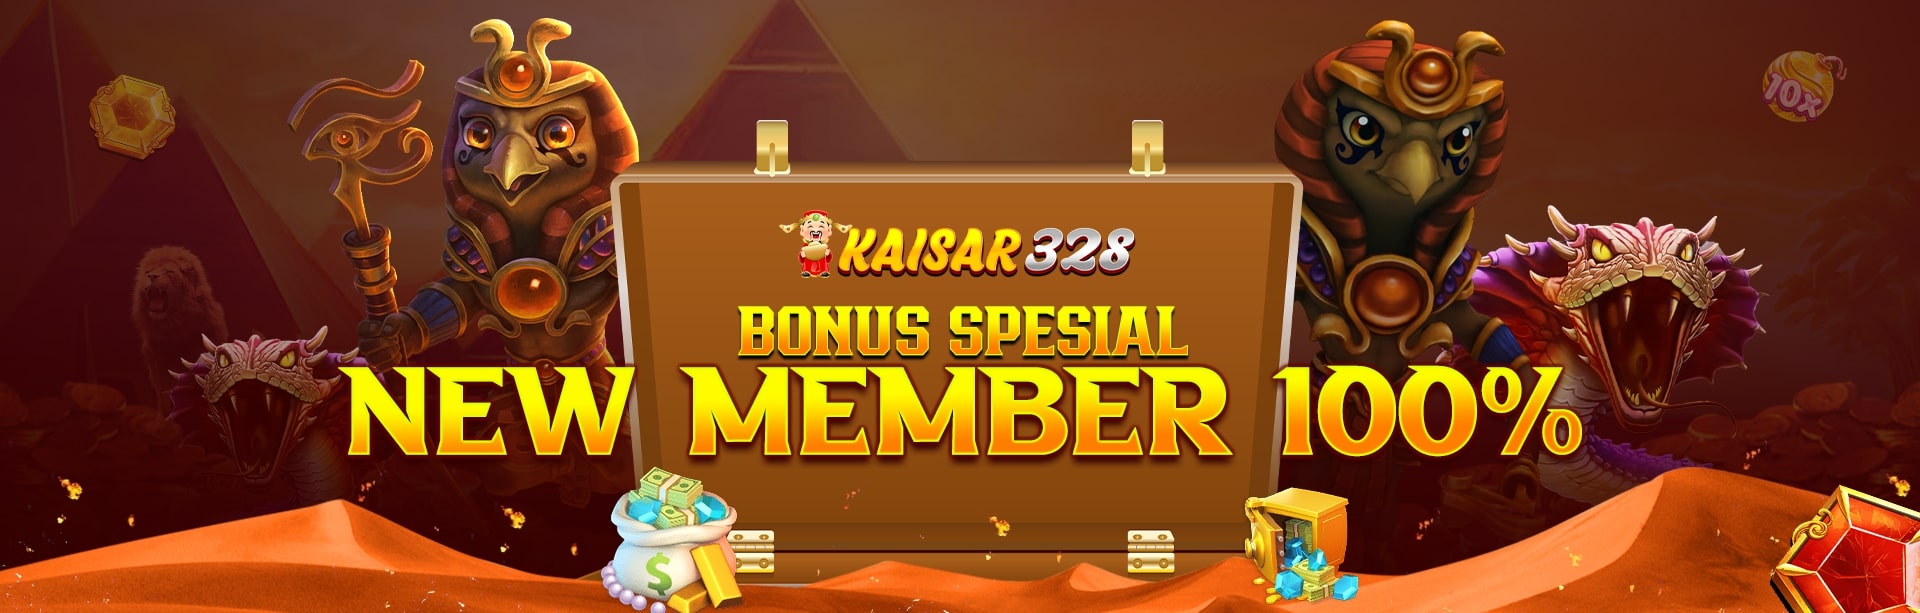 Bonus New Member 100% Kaisar328